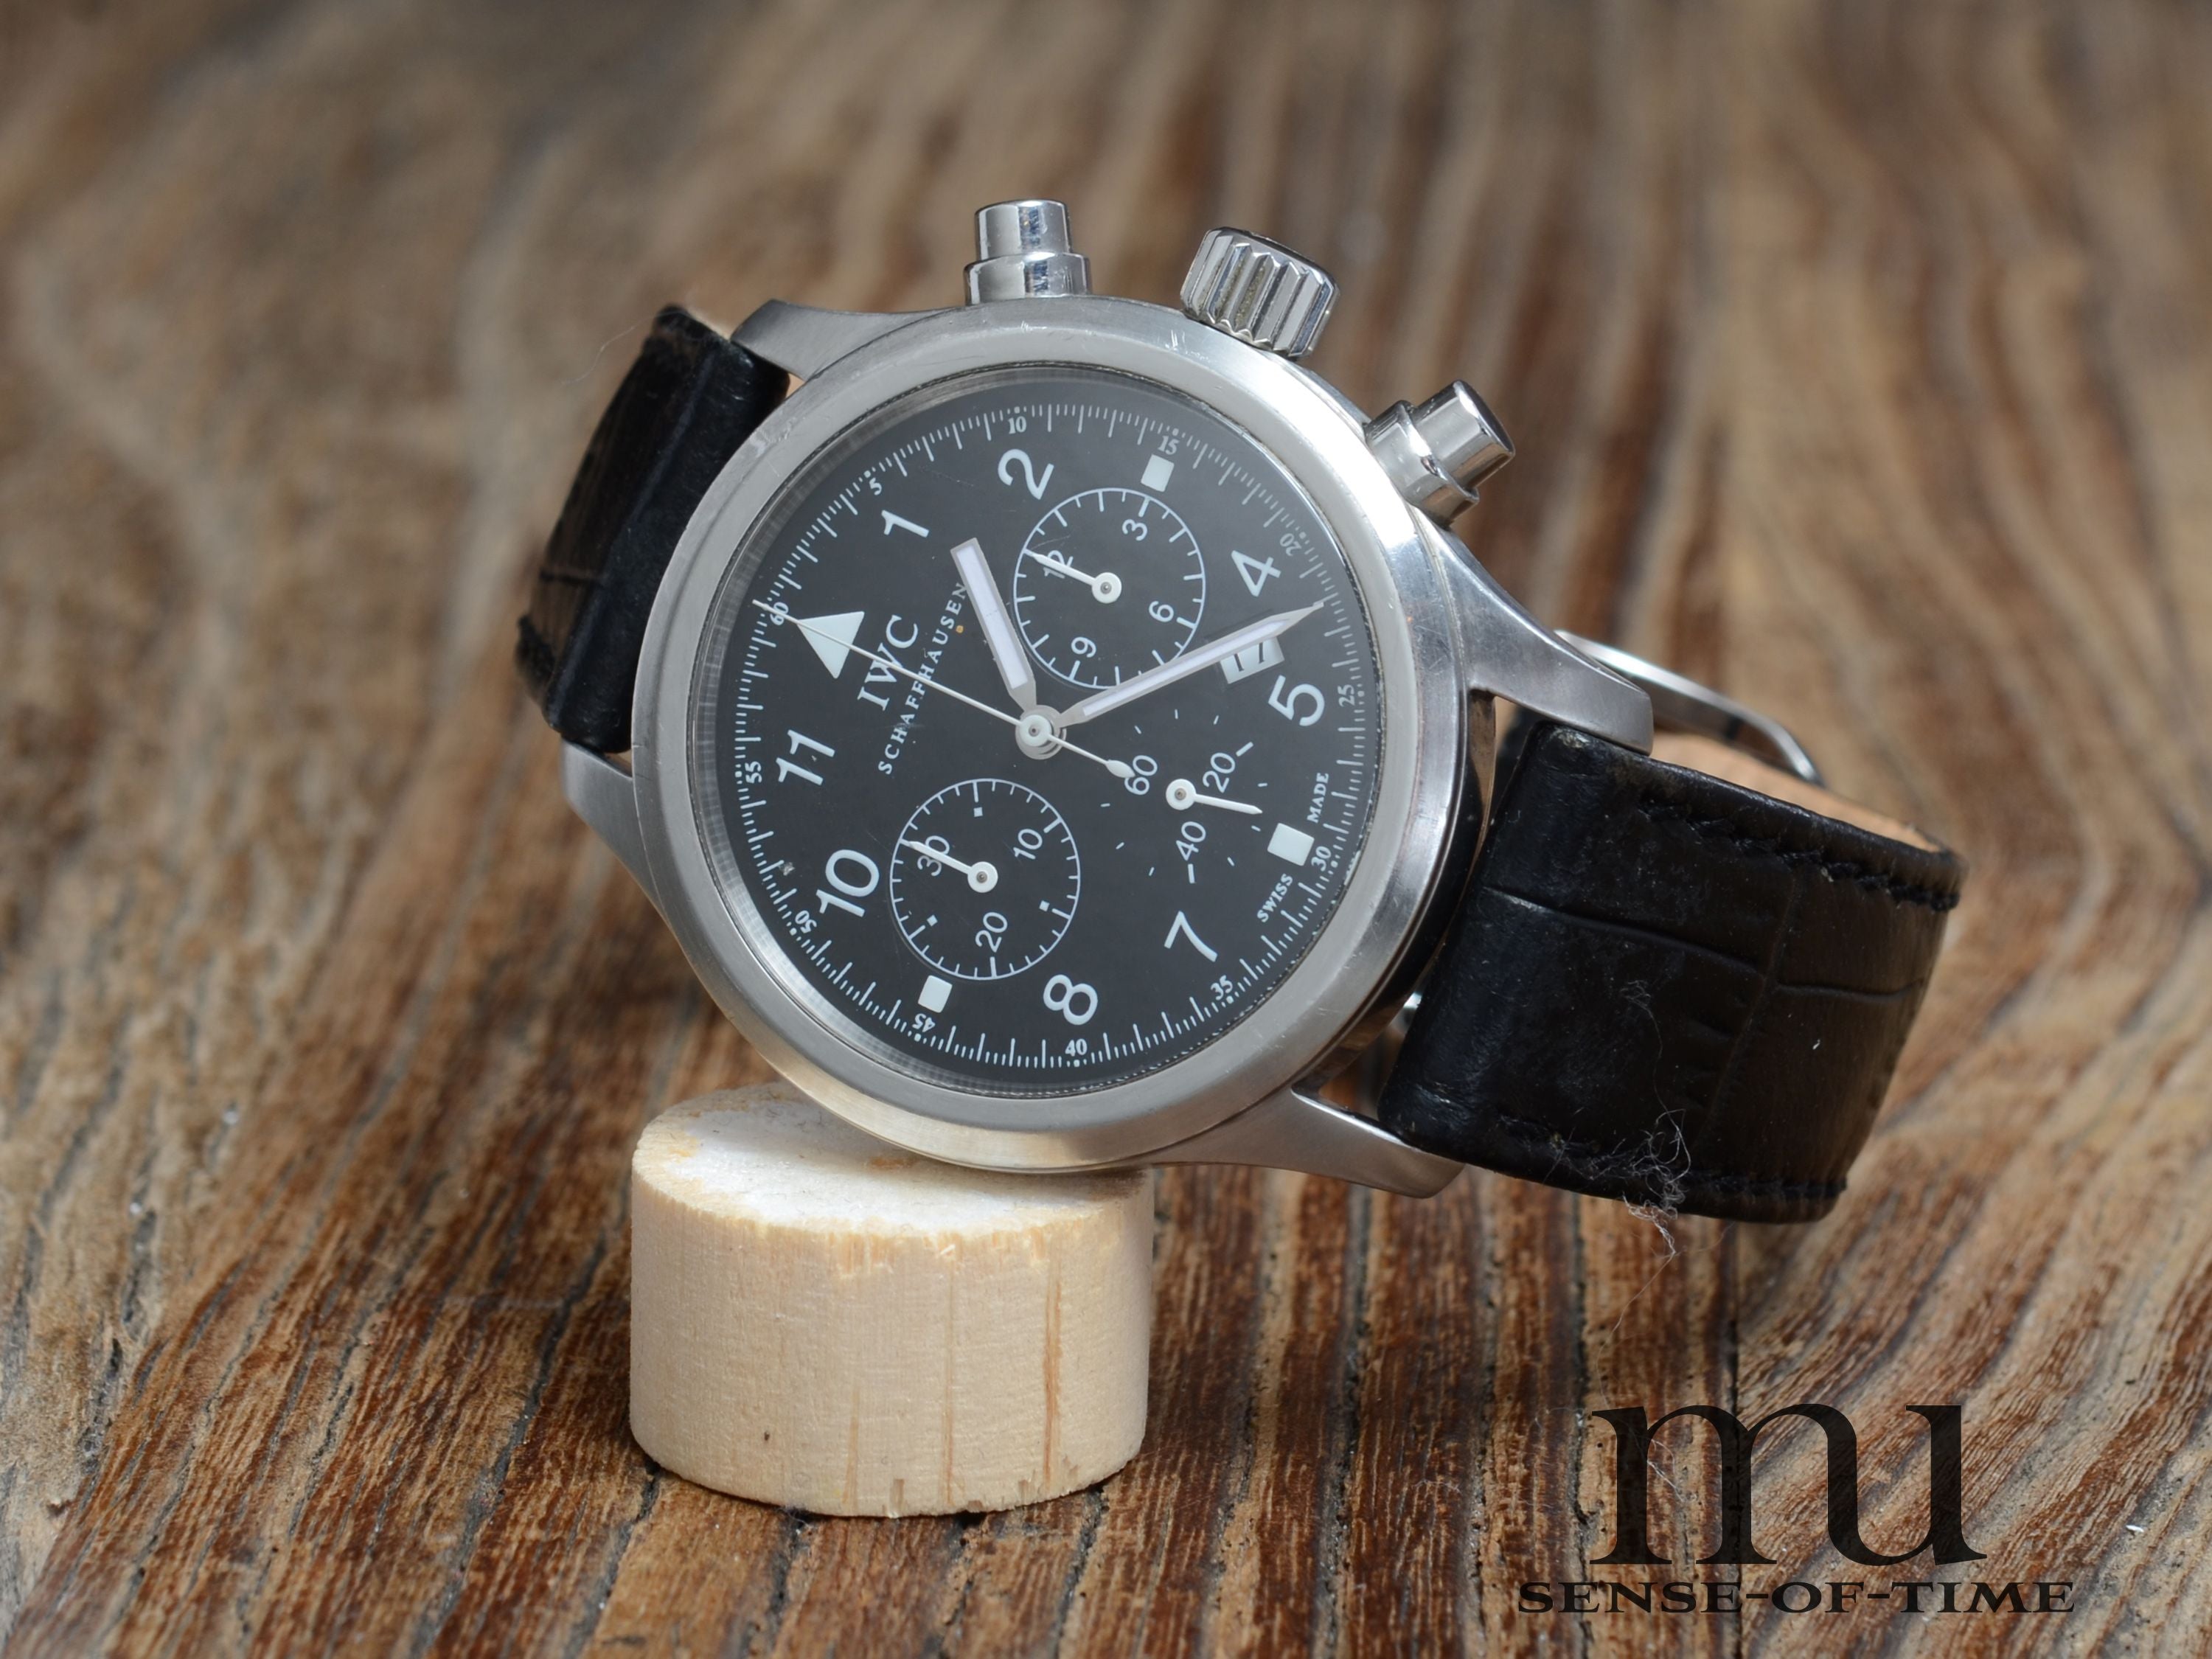 IWC Flieger-Chronograph Pilot's Watch, IW3741